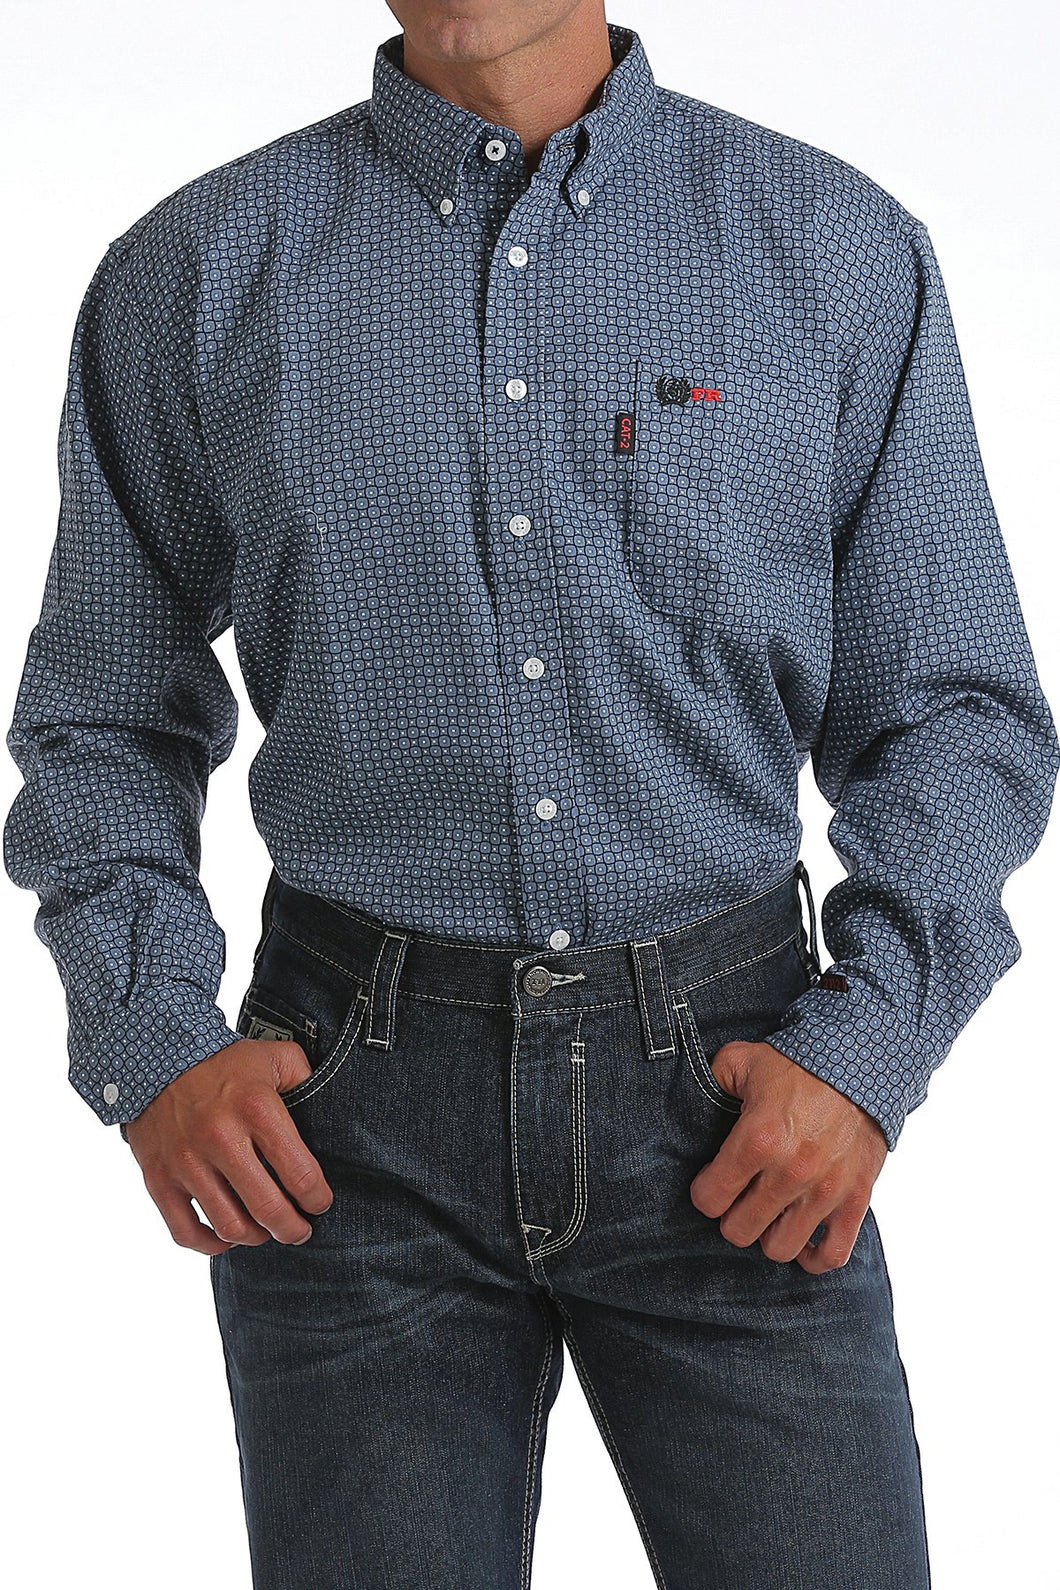 Mens Fire Resistant Plaid Shirt - Cinch - Blue Geometric